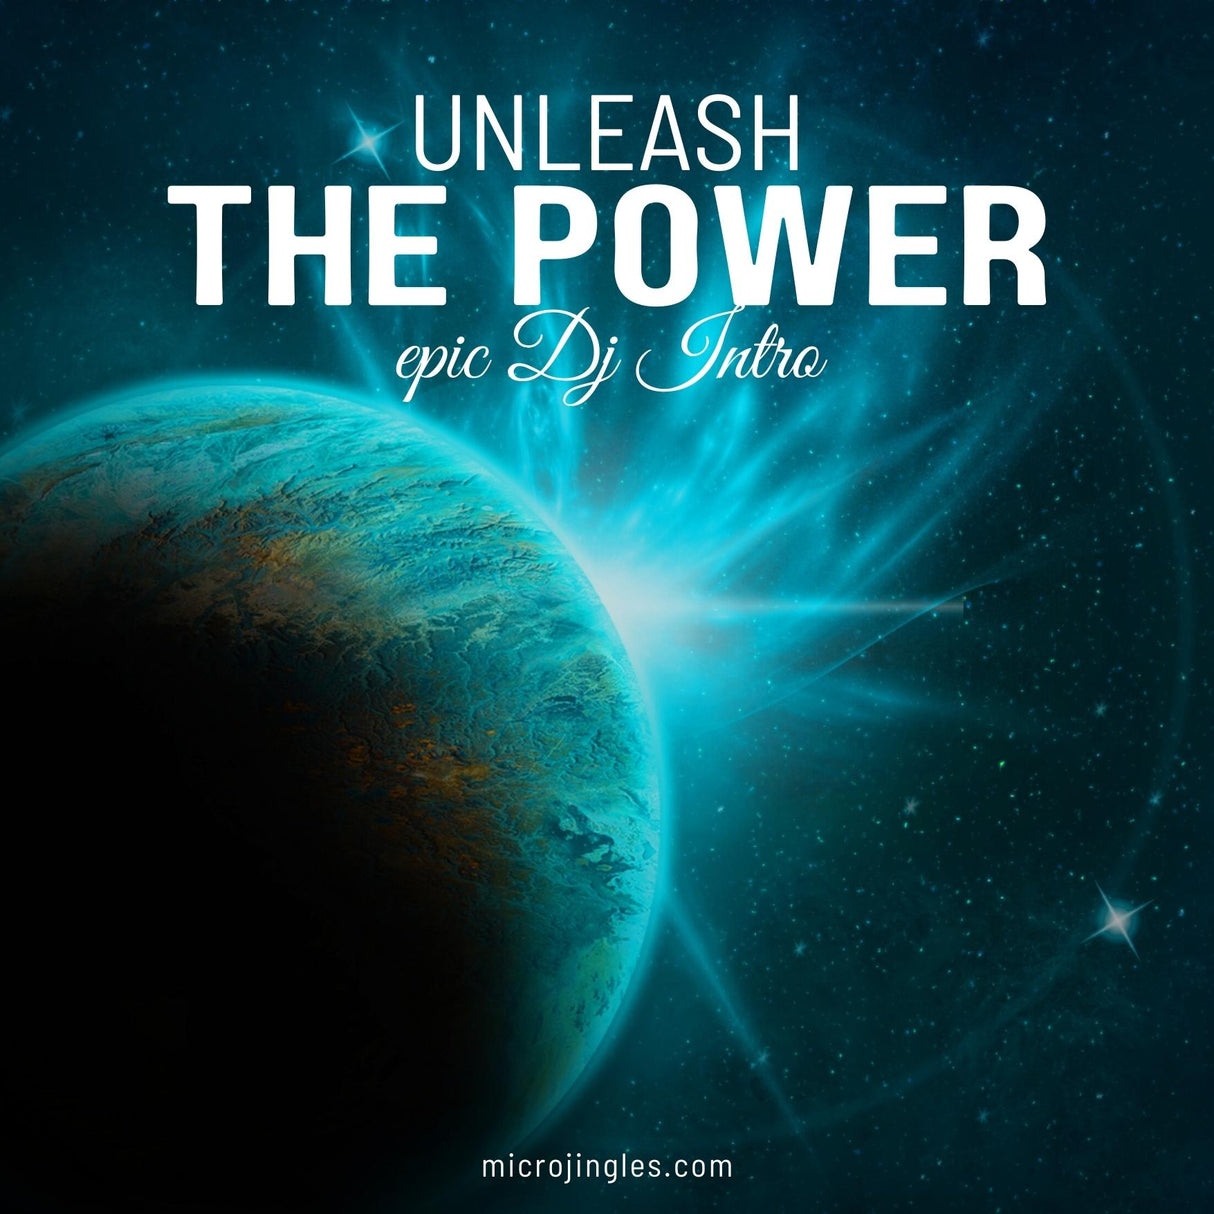 UNLEASH THE POWER - Epic DJ Intro